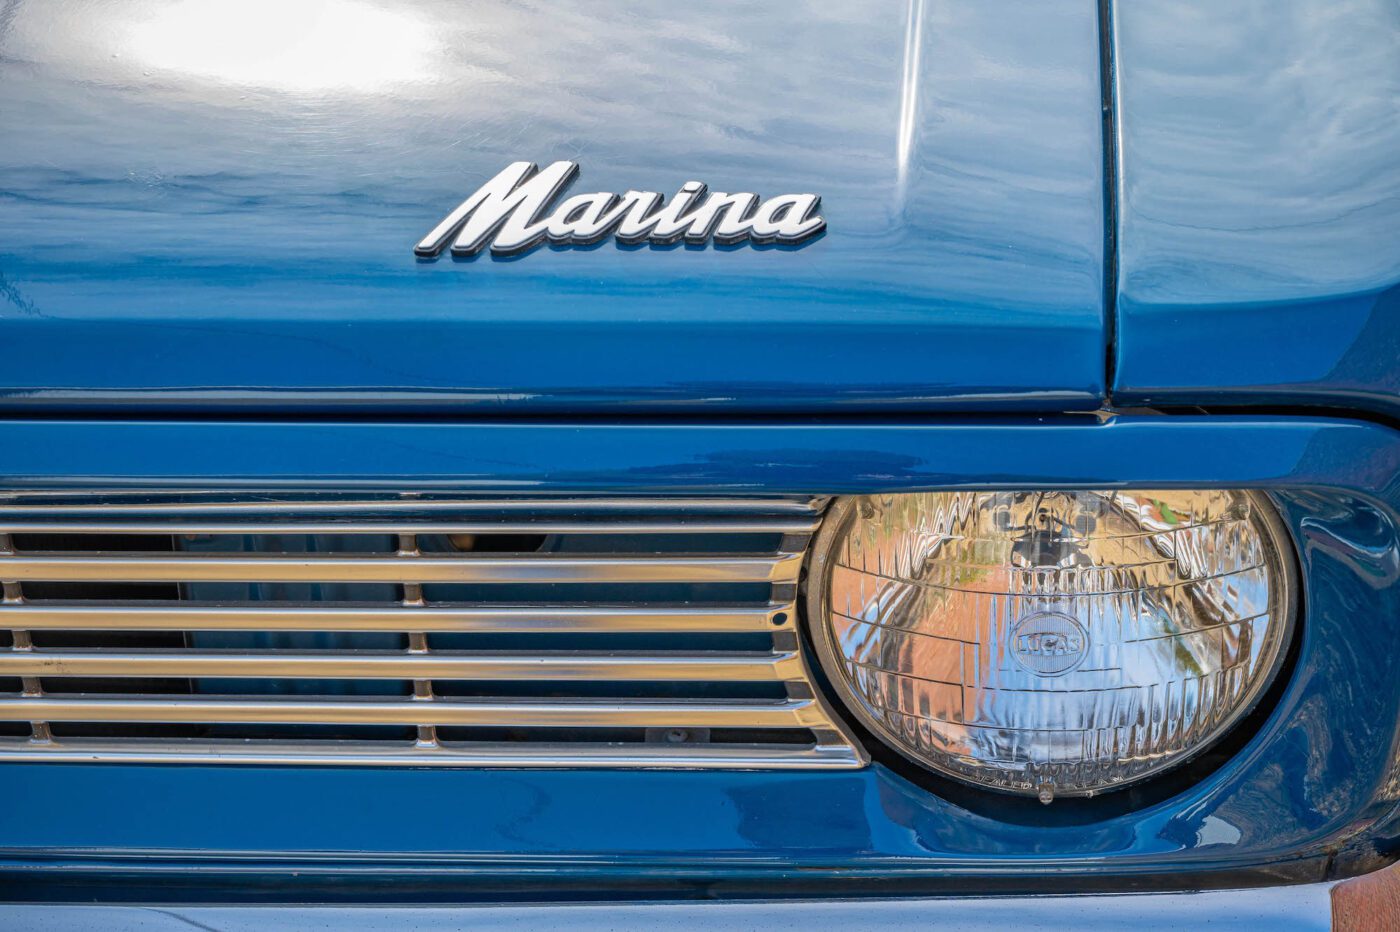 Morris Marina headlight